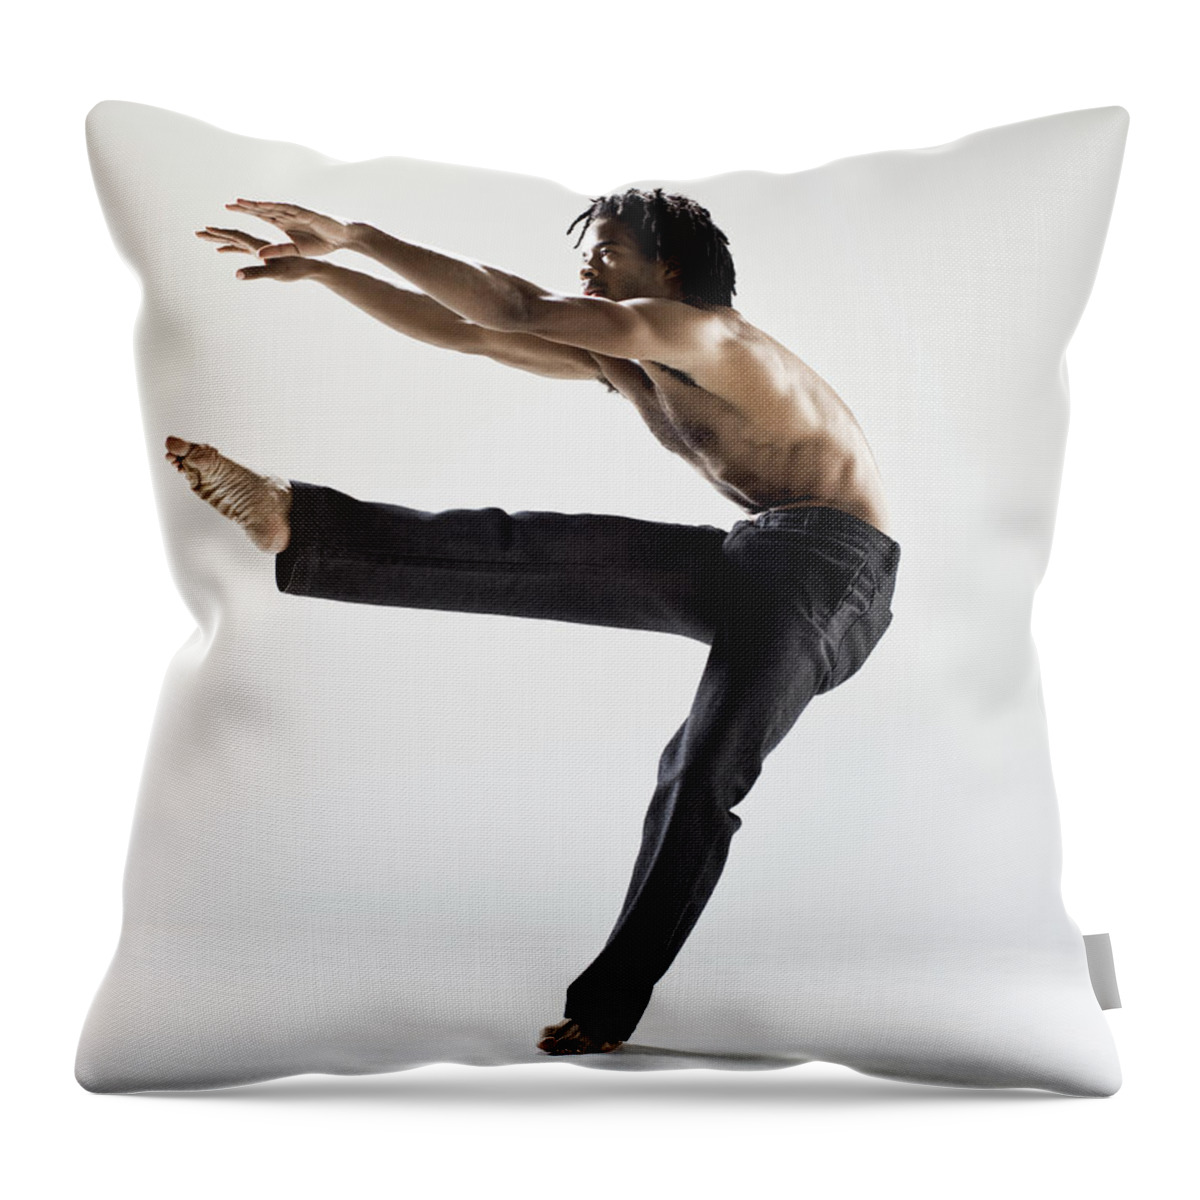 Human Arm Throw Pillow featuring the photograph Dance Studio #3 by Patrik Giardino